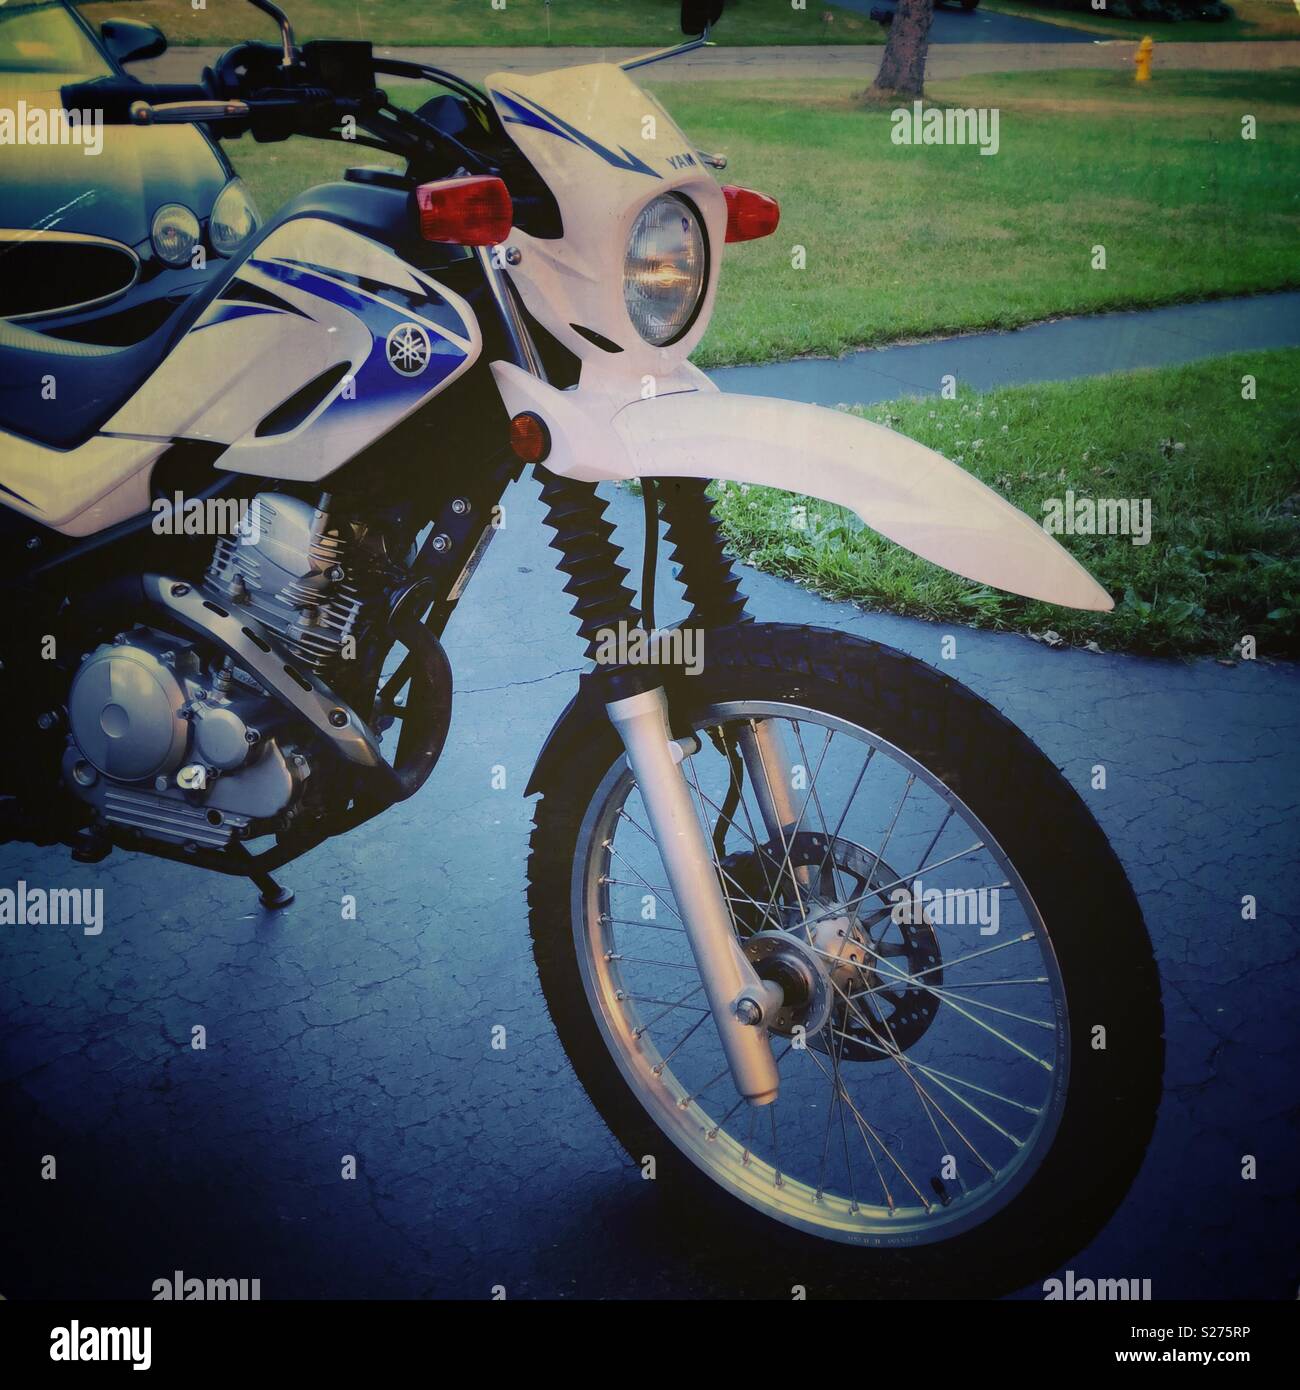 Honda motorcycle Stock Photo